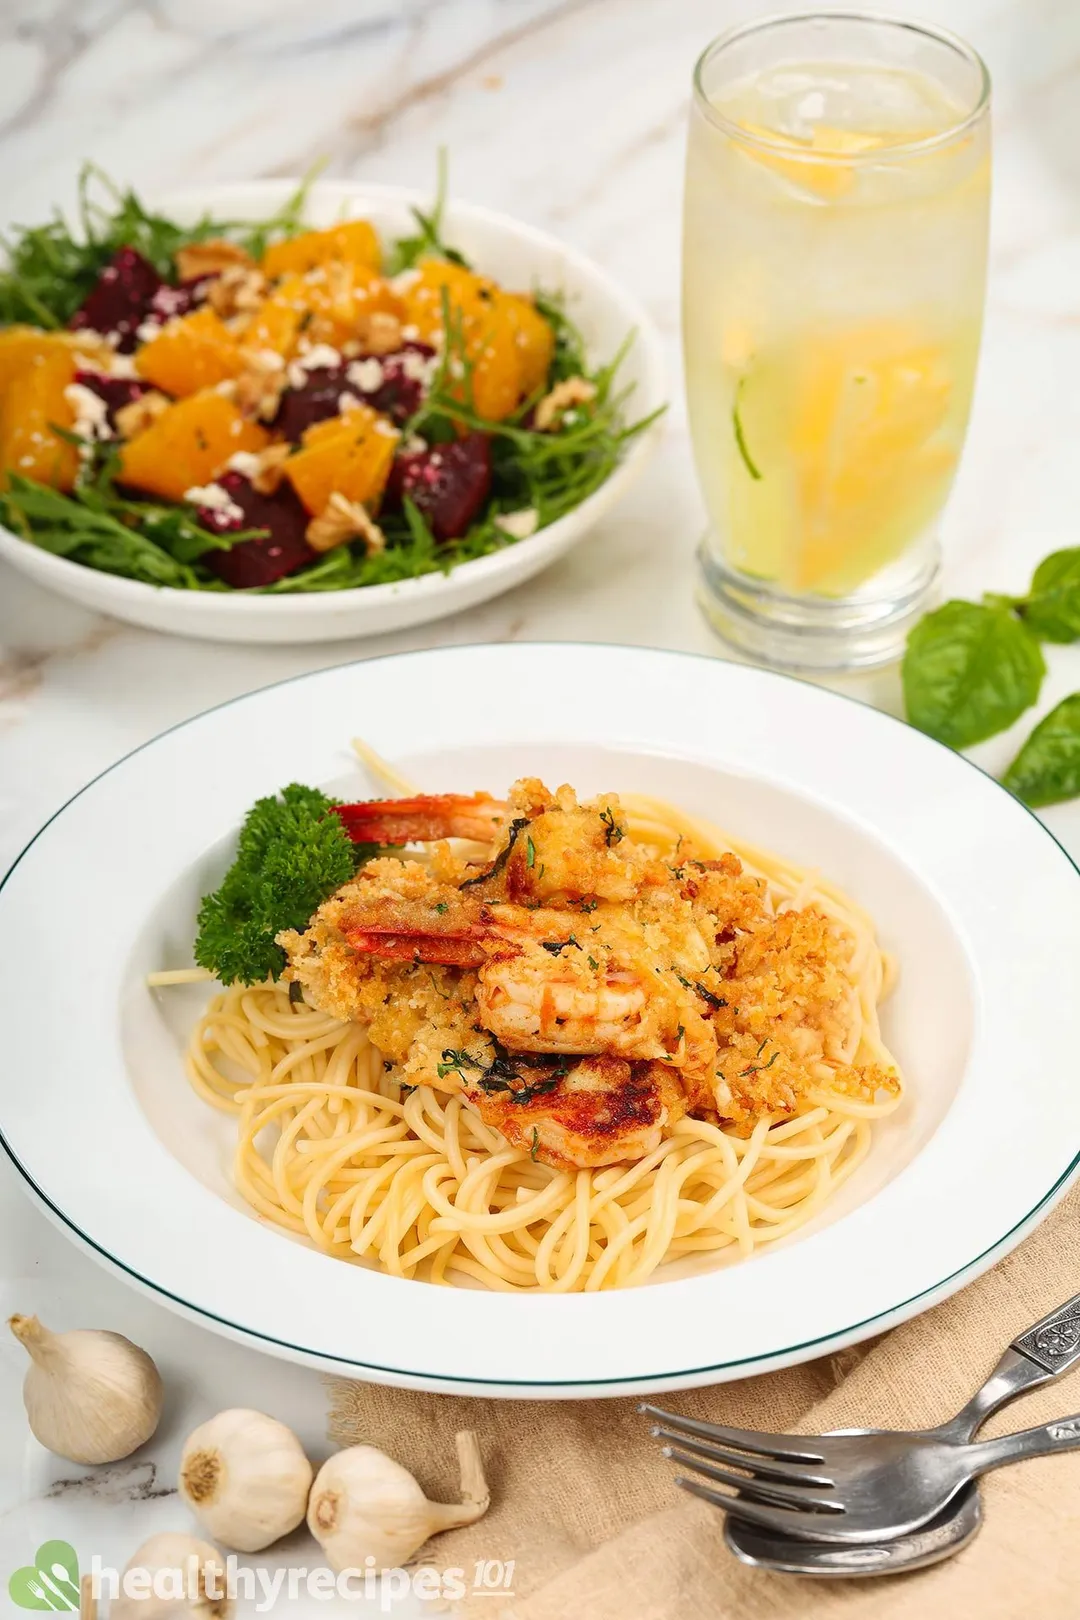 What to Serve With Shrimp Parmesan